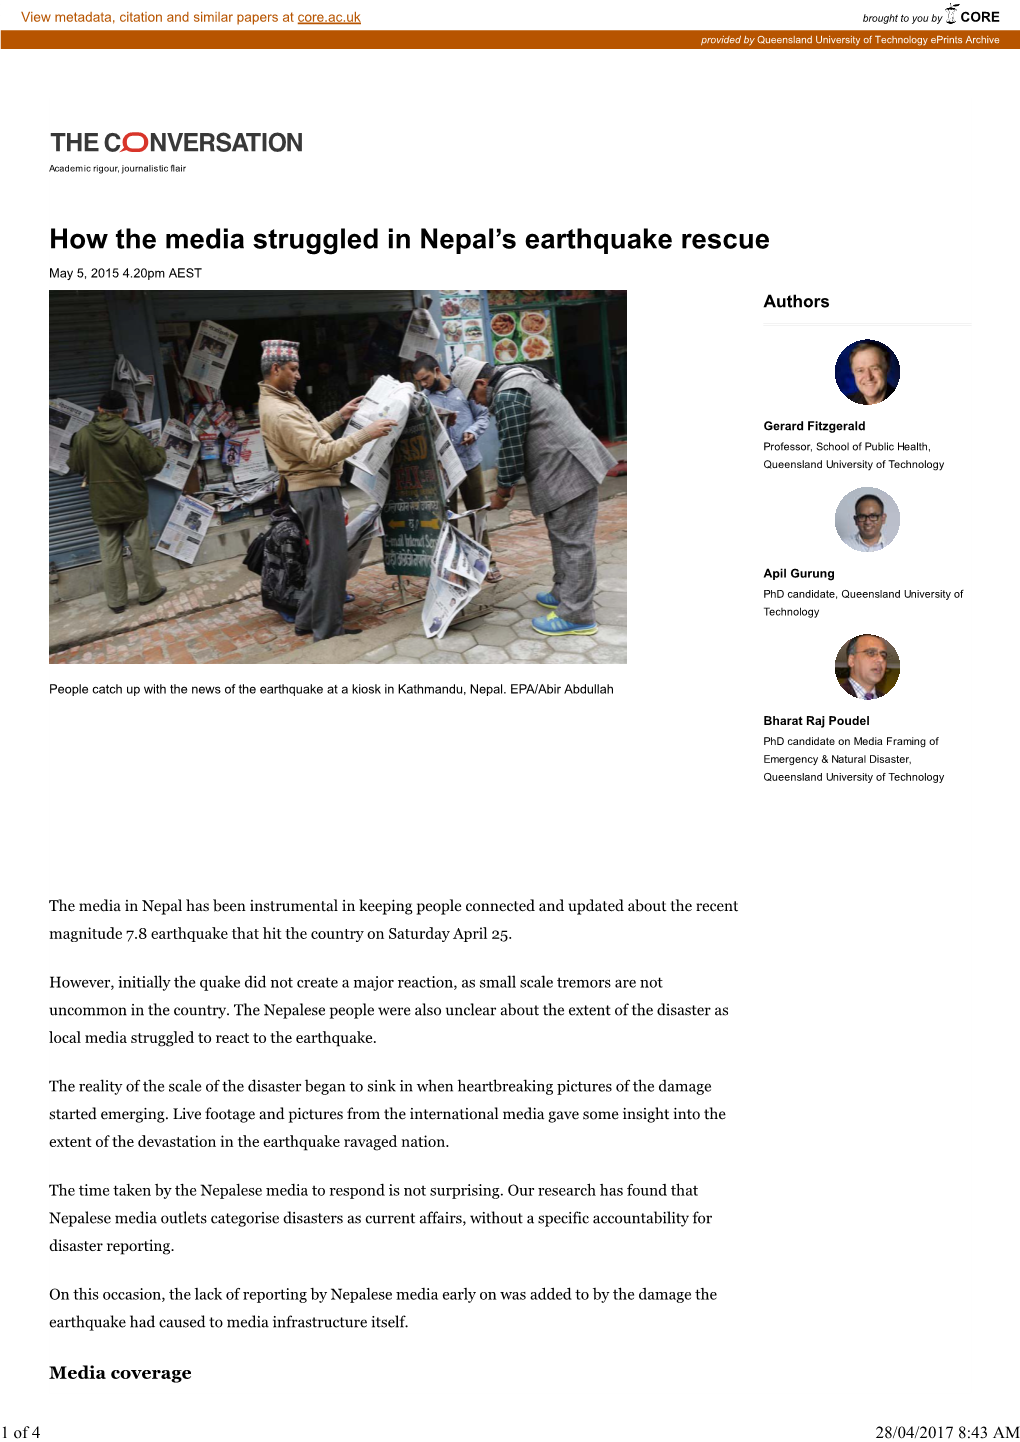 How the Media Struggled in Nepal's Earthquake Rescue